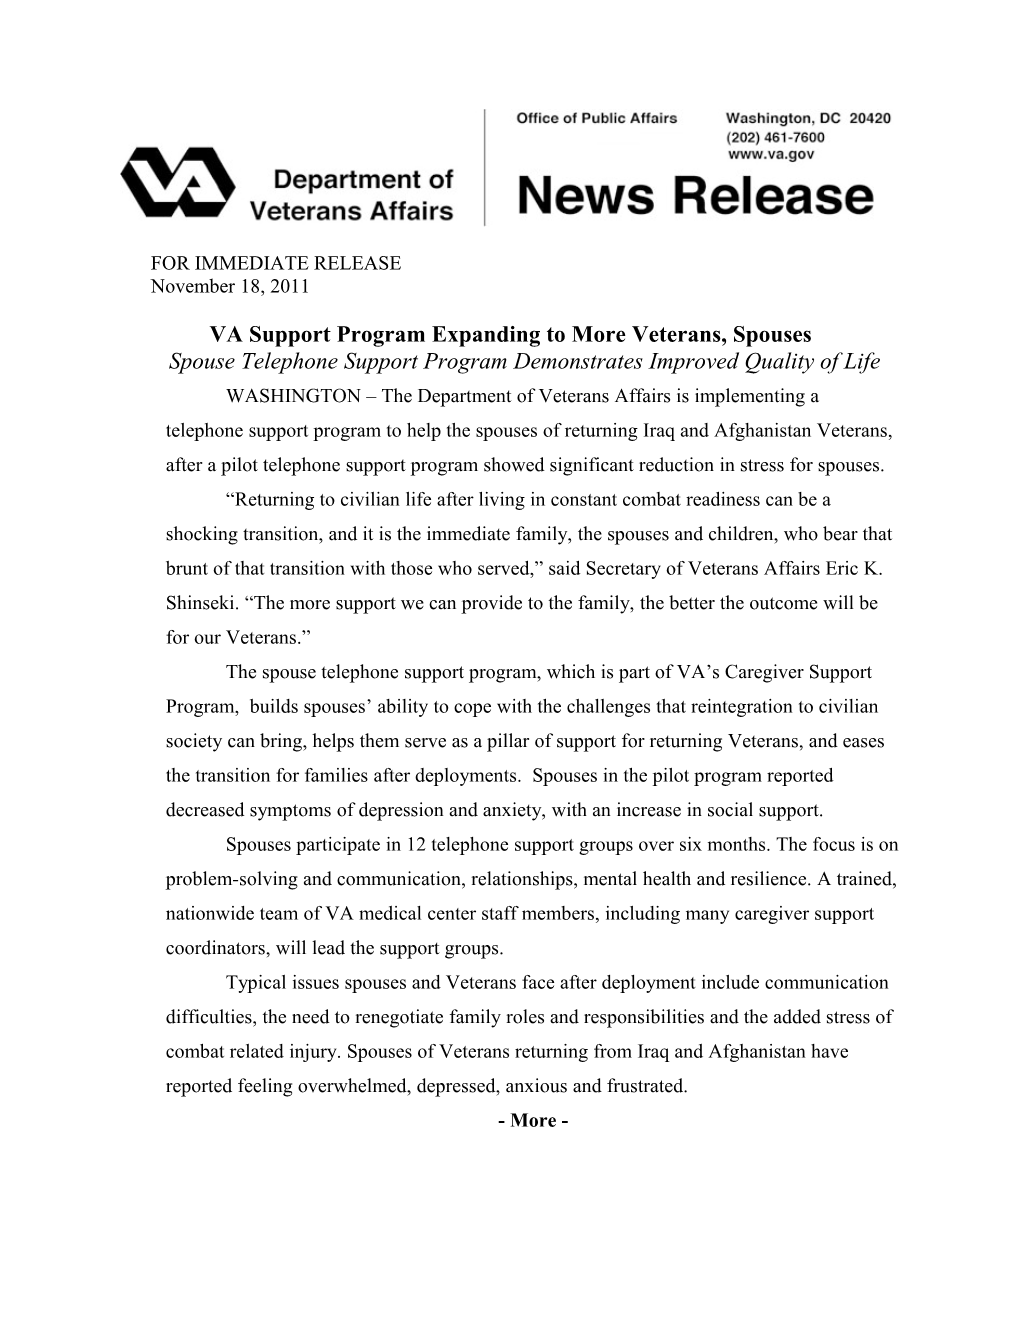 VA Support Program Expanding to More Veterans, Spouses